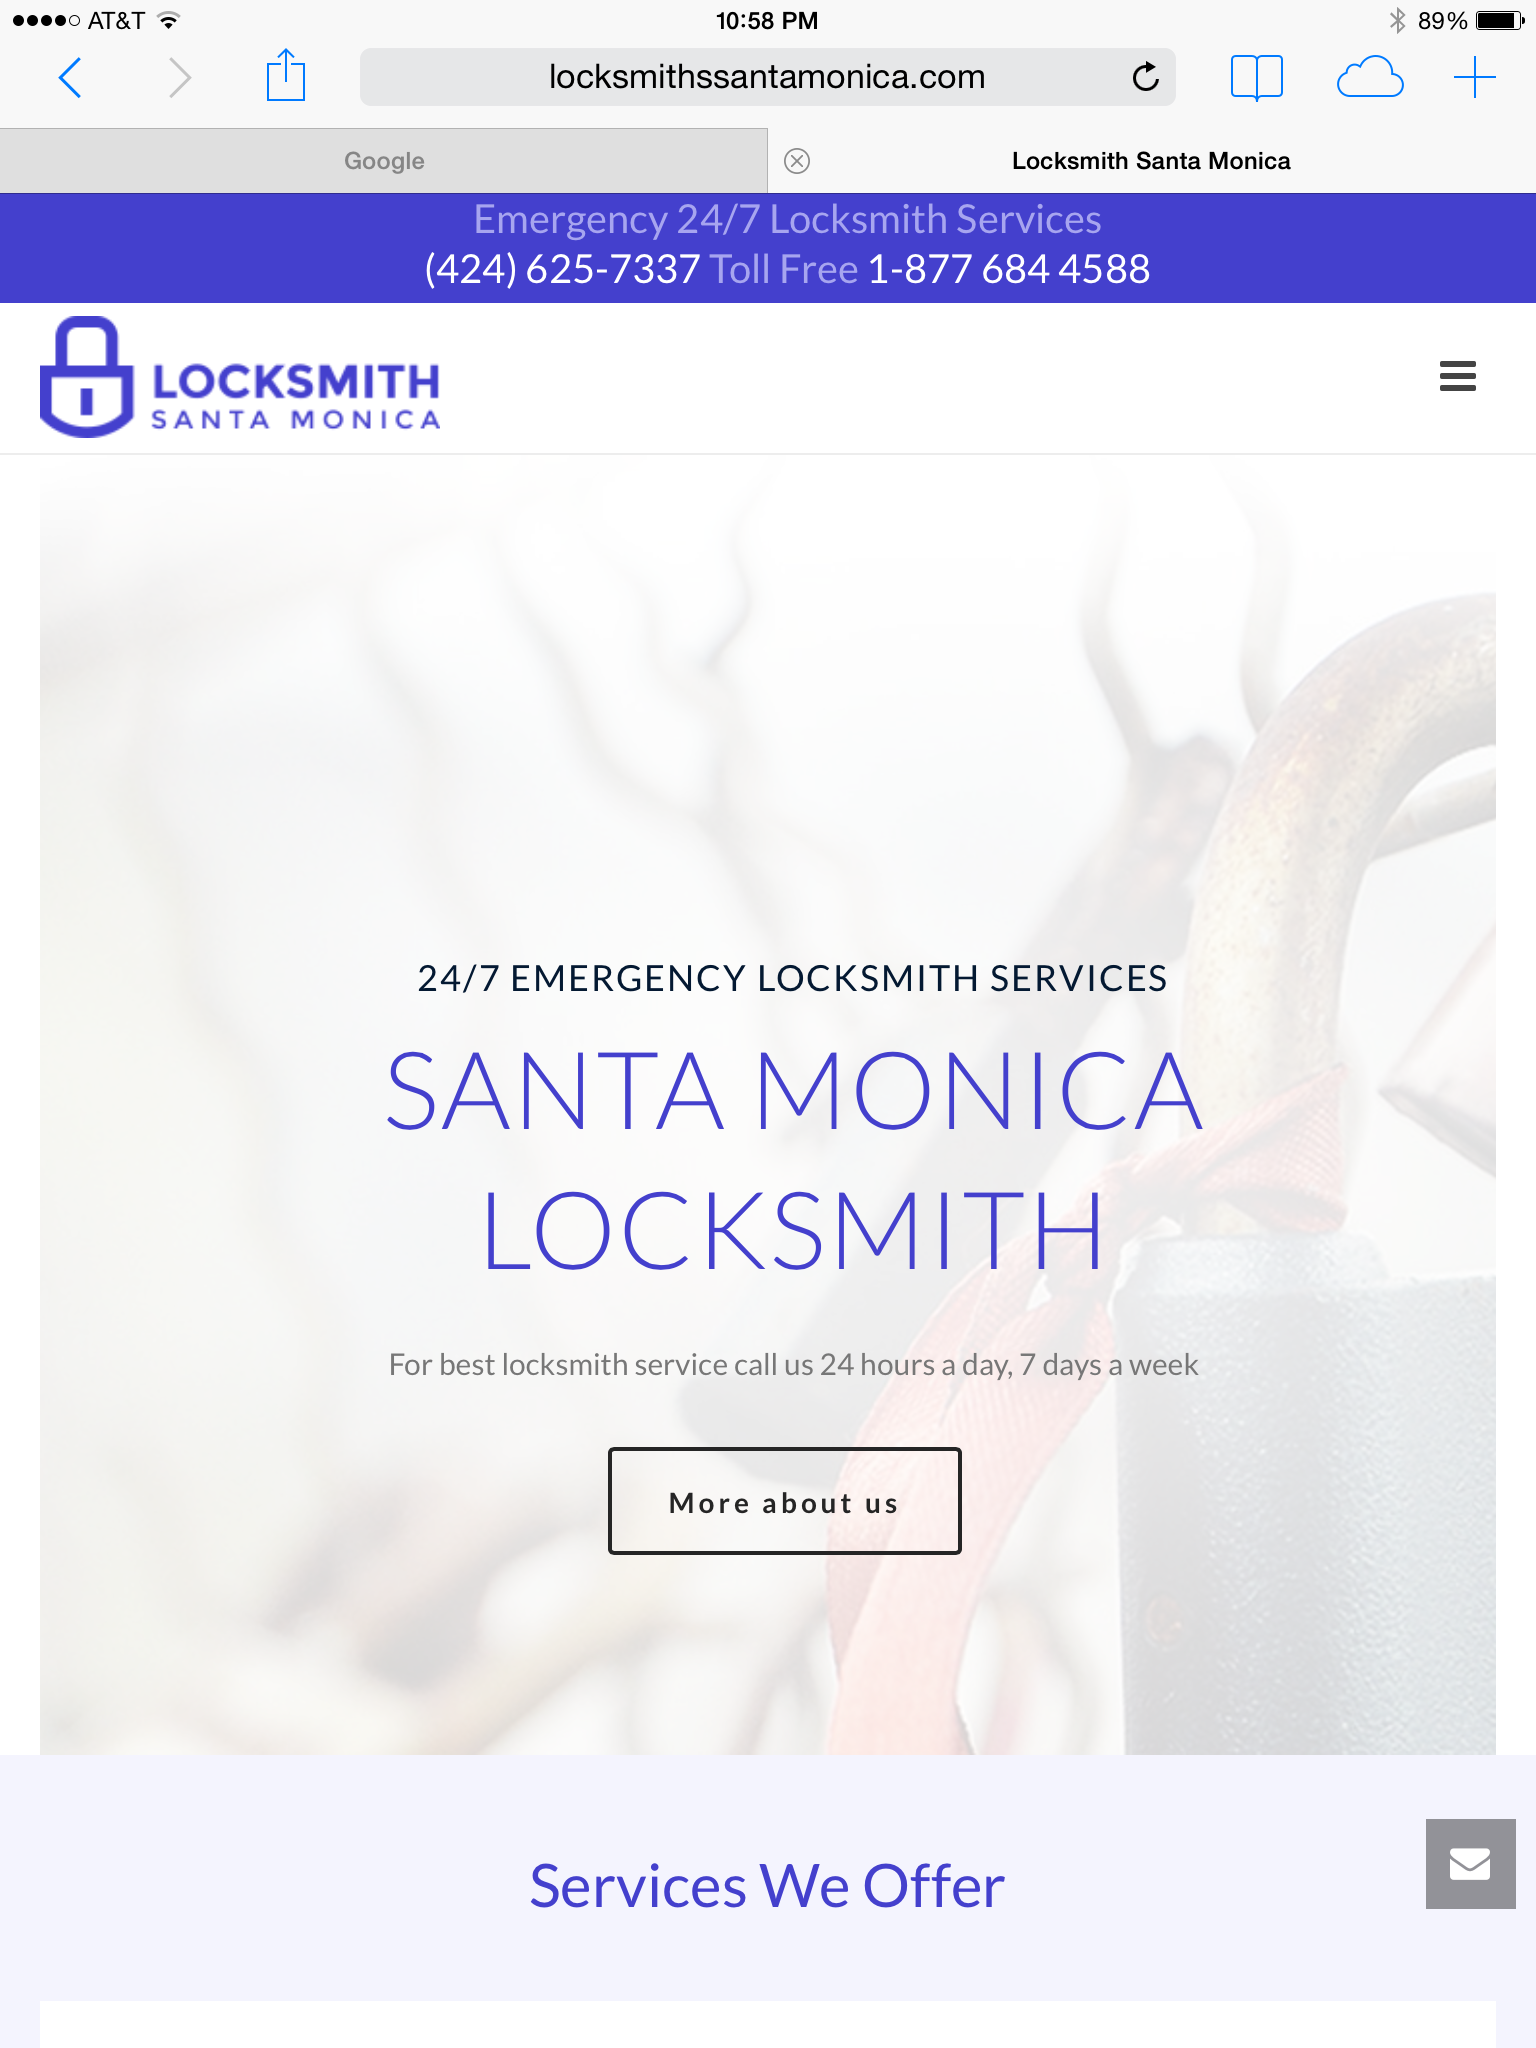 Locksmith Santa Monica Photo